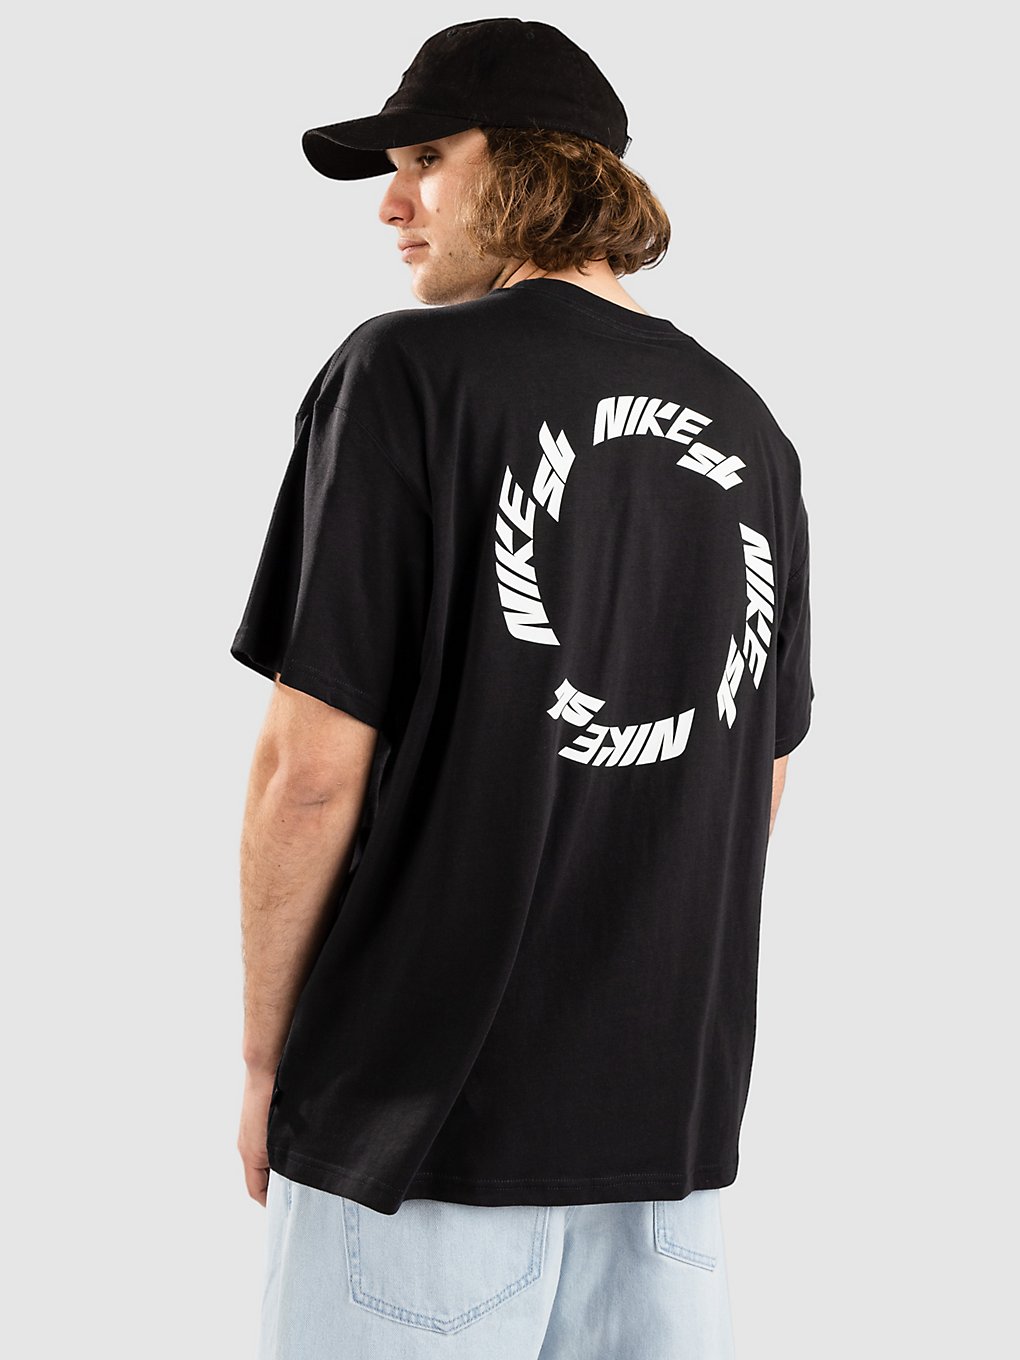 Nike SB Wheel T-Shirt black kaufen